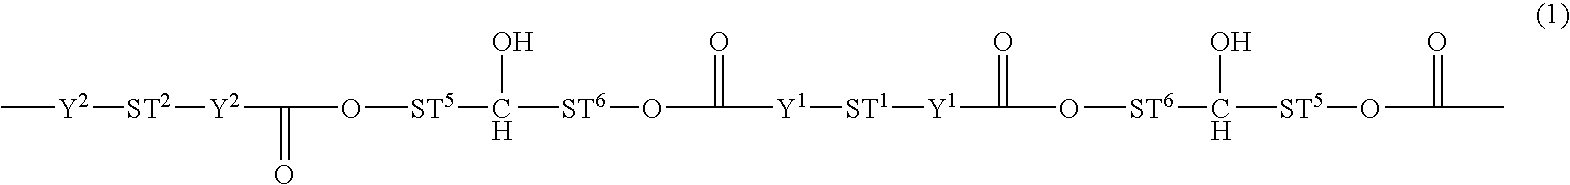 Polycarbonate and/or polyurethane polyorganosiloxane compounds